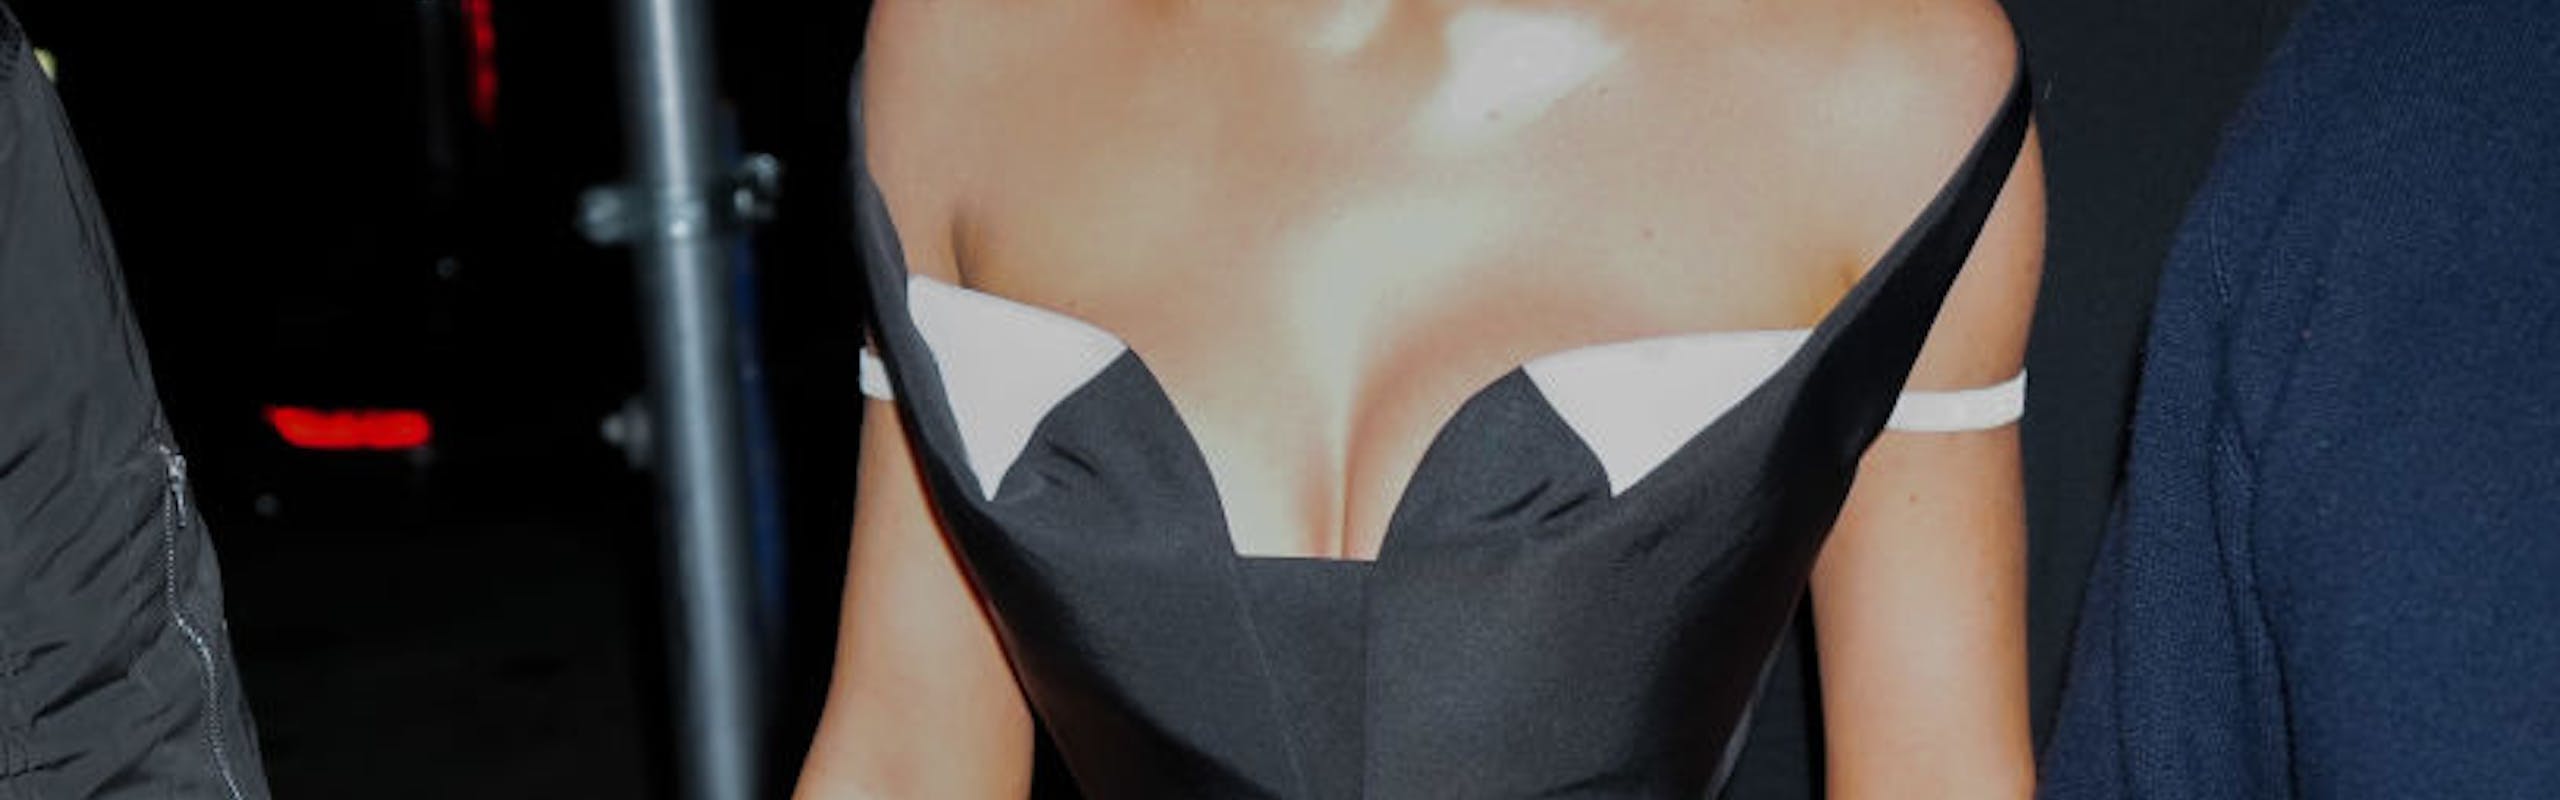 Kylie Jenner in a black dress.